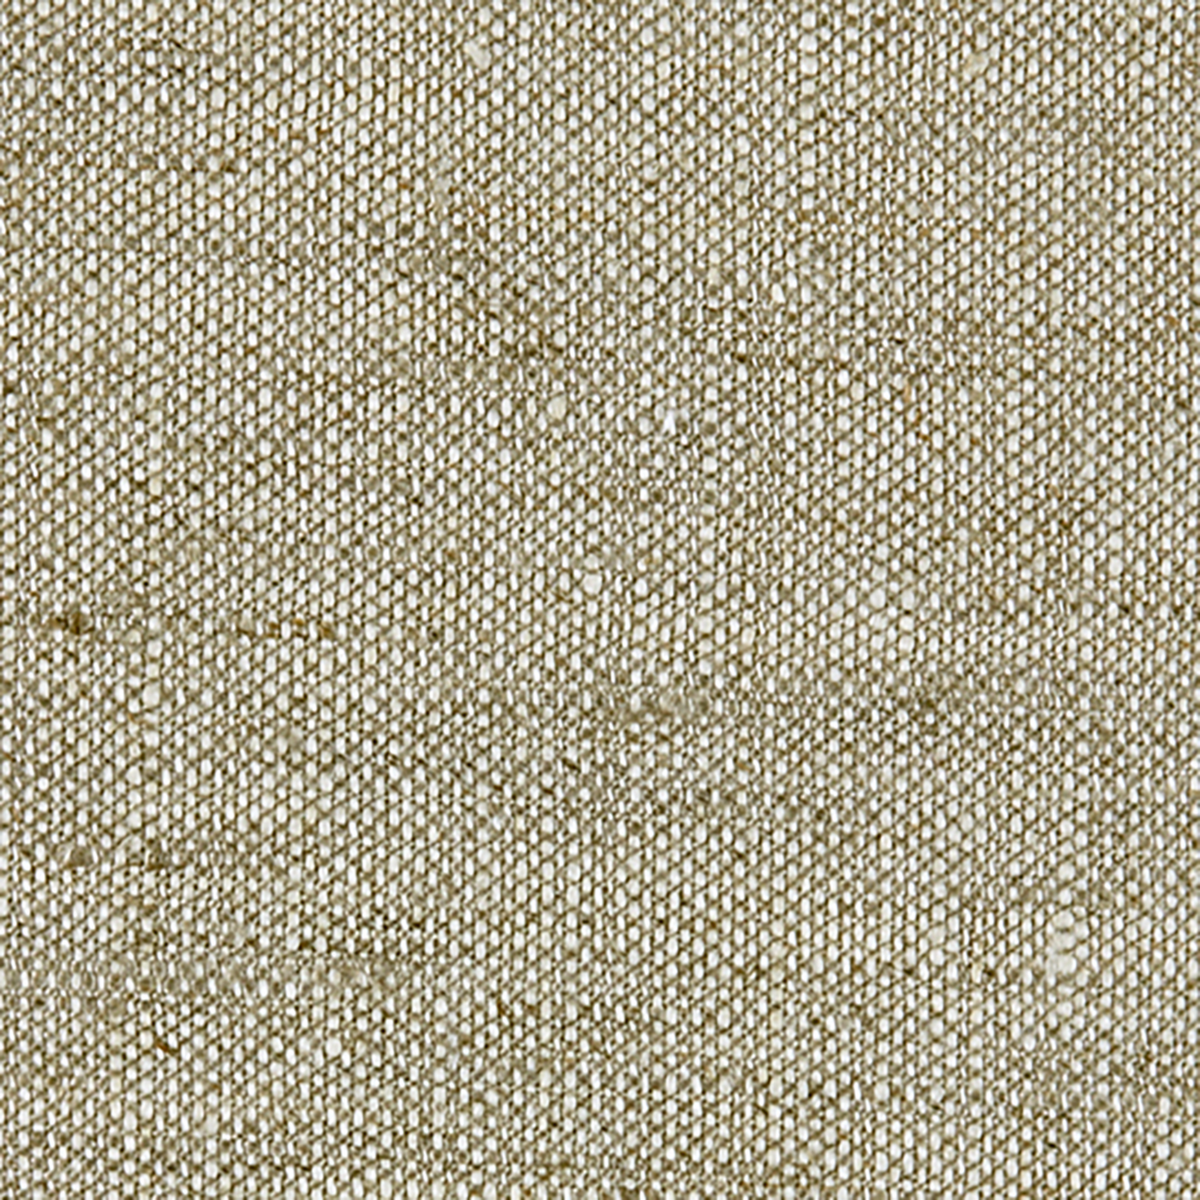 Swatch Sample of Oatmeal Matouk Chelsea Linen Tissue Box Cover